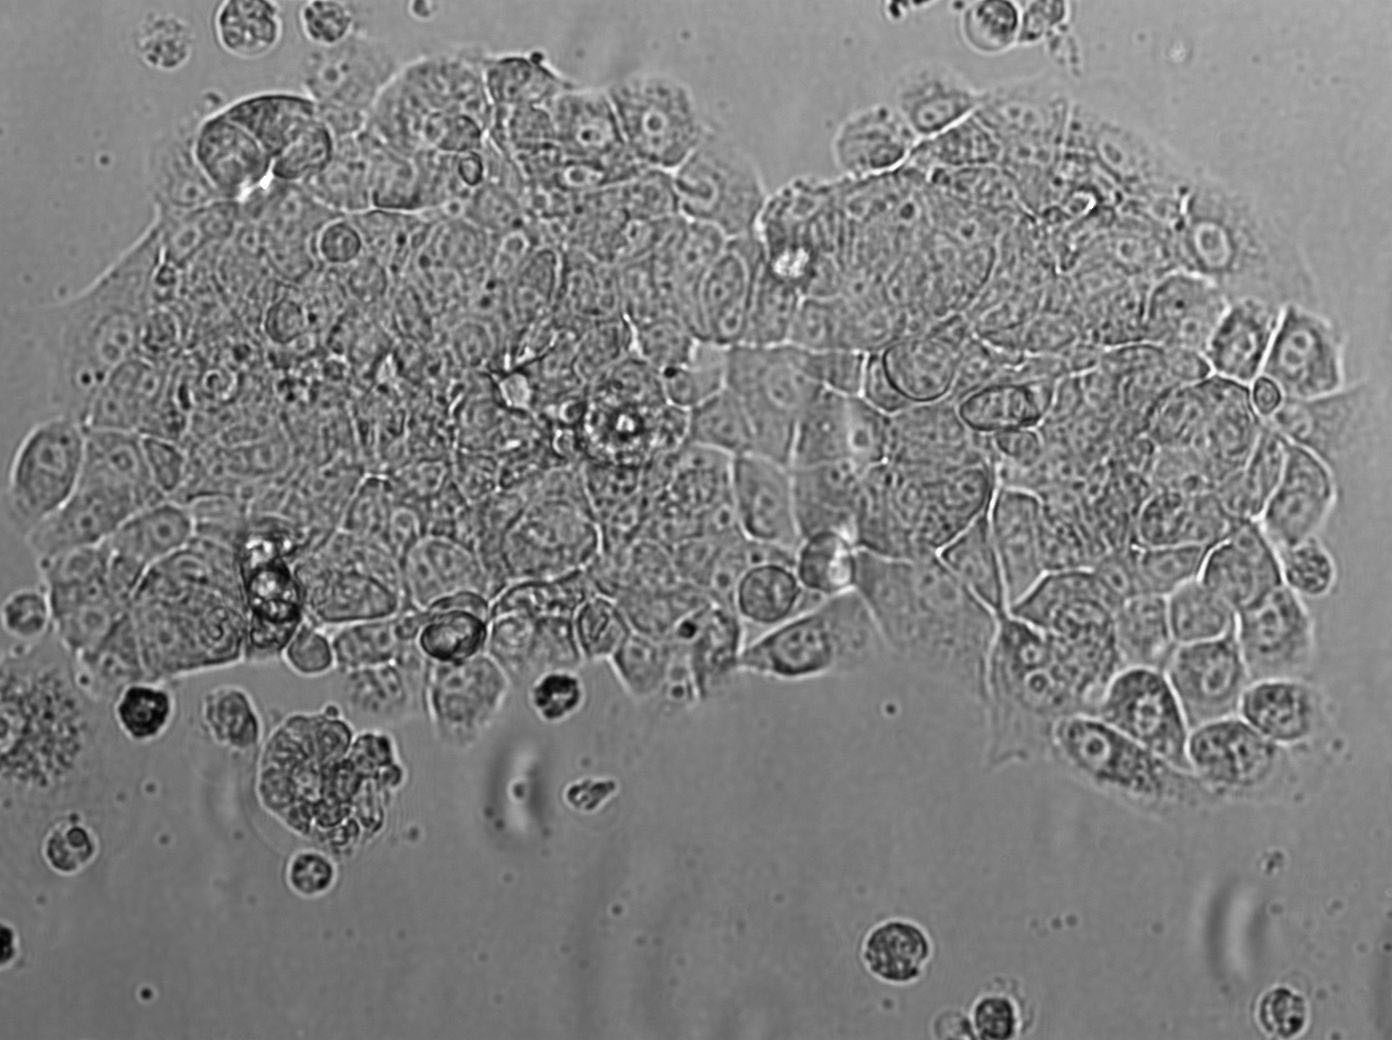 MIHA Cell|正常人肝细胞,MIHA Cell